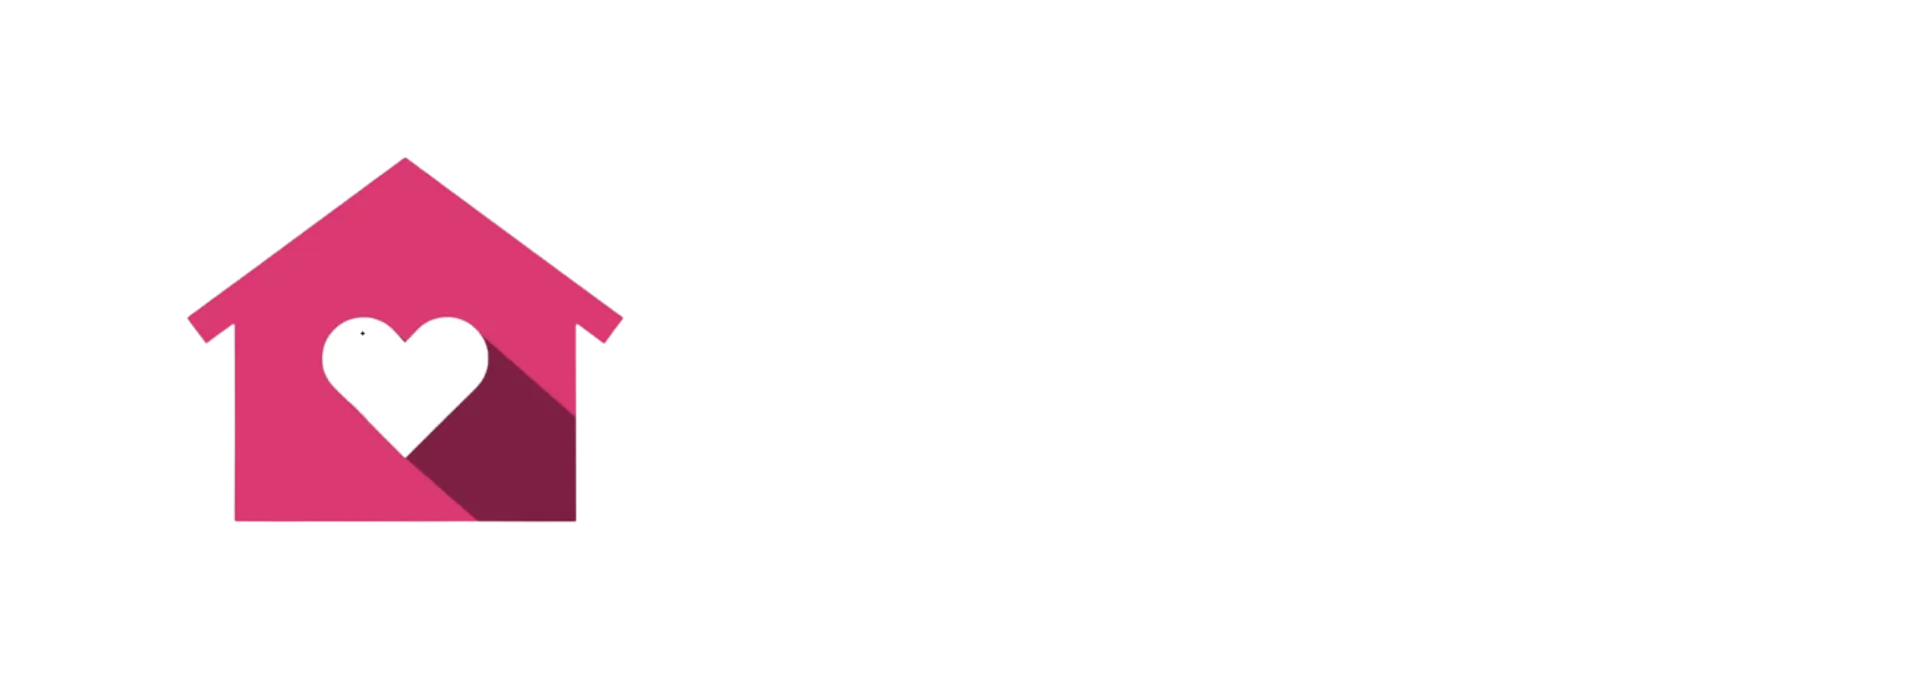 South Island Home Care